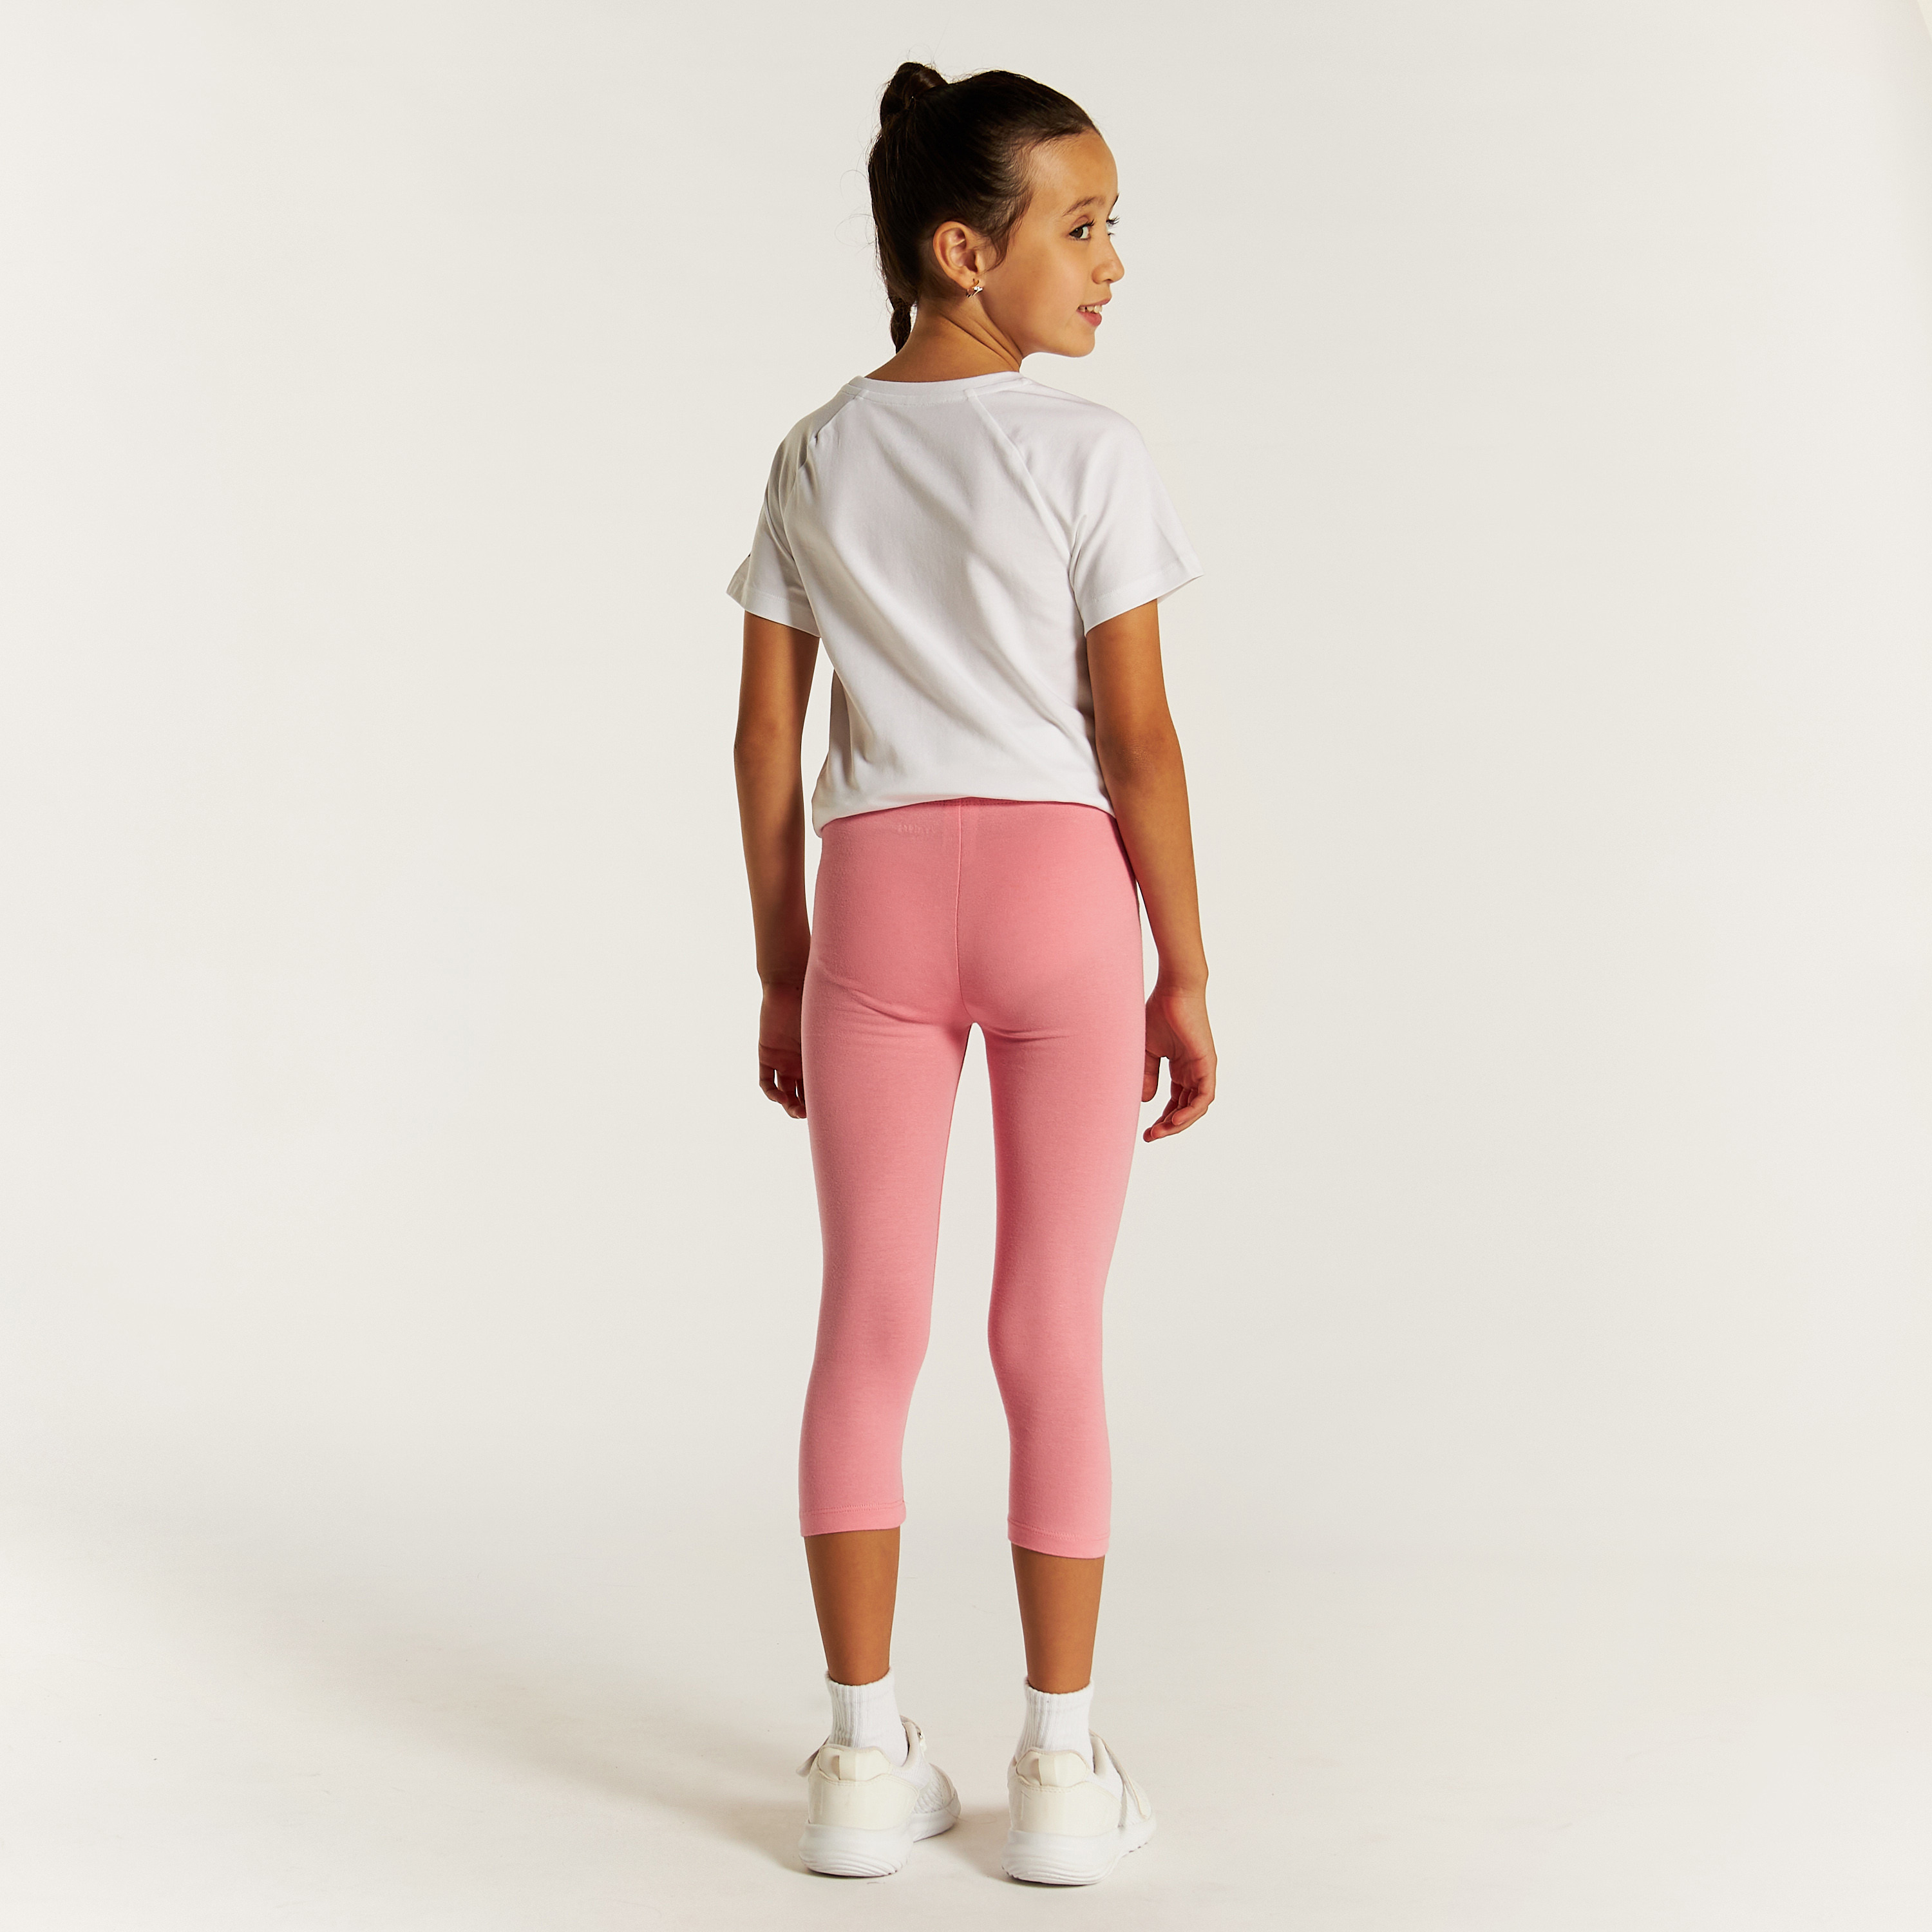 Studio 7 Dancewear 3/4 Cotton Leggings Tights Children Sizes